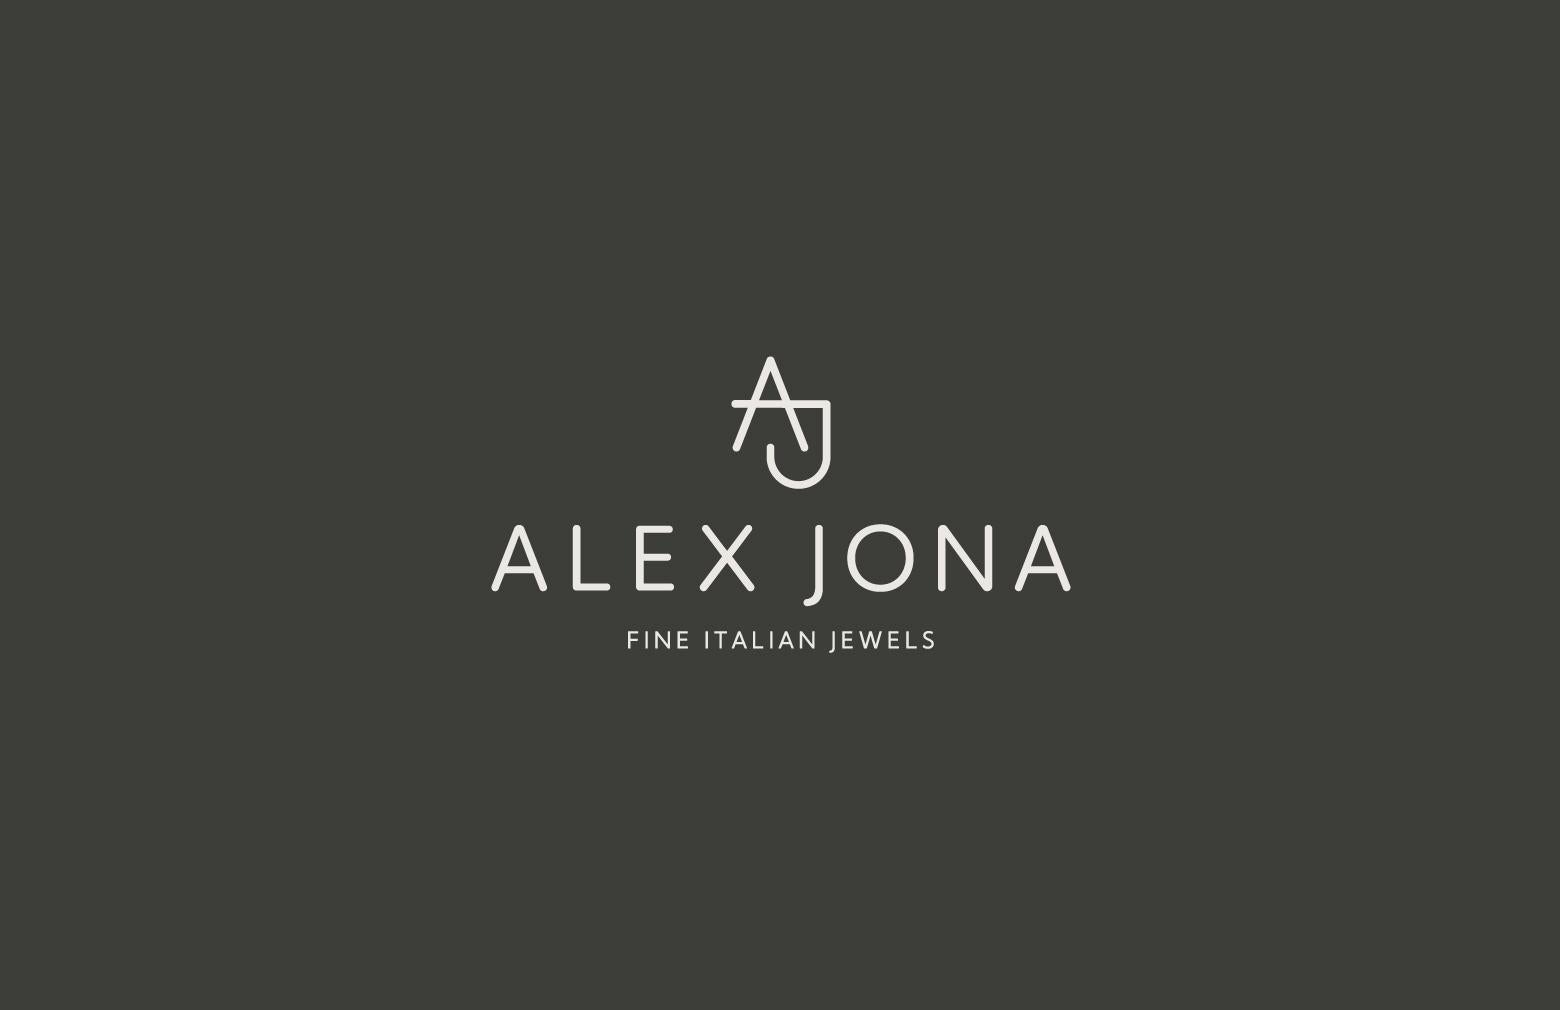 Alex Jona Blue and Red Enamel Sterling Silver Cufflinks For Sale 6